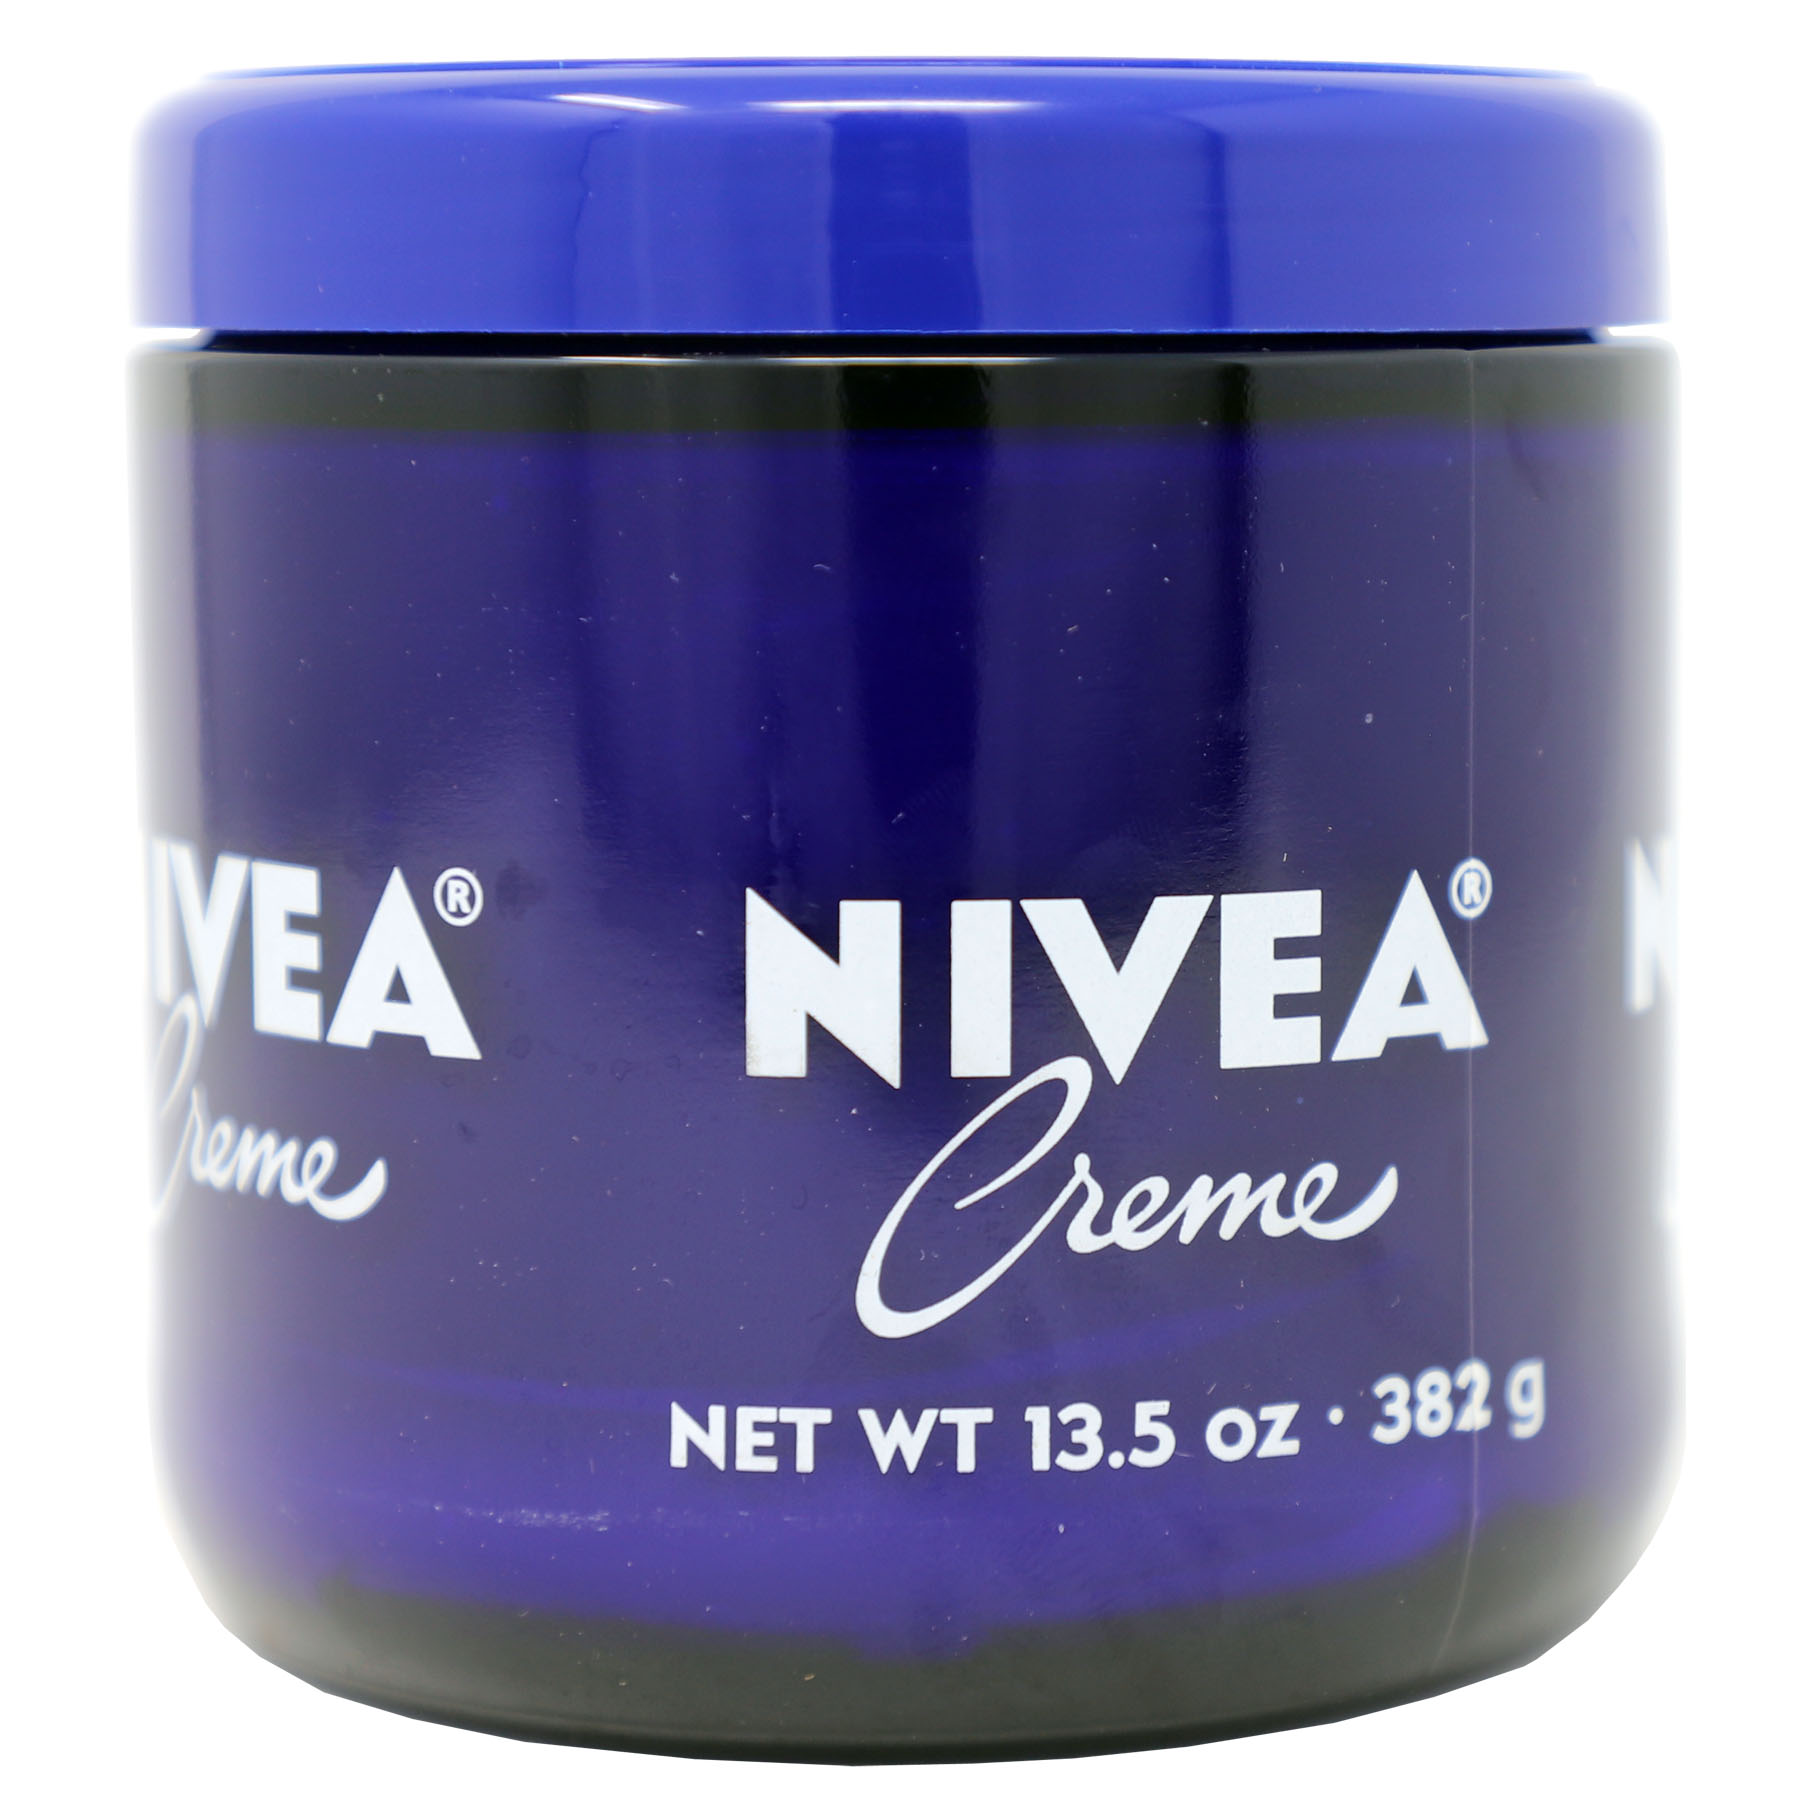 Nivea Cream Glass Jar, Moisturizer for Body, Face & Hand Care, All Skin Types, 13.5 oz - image 5 of 5